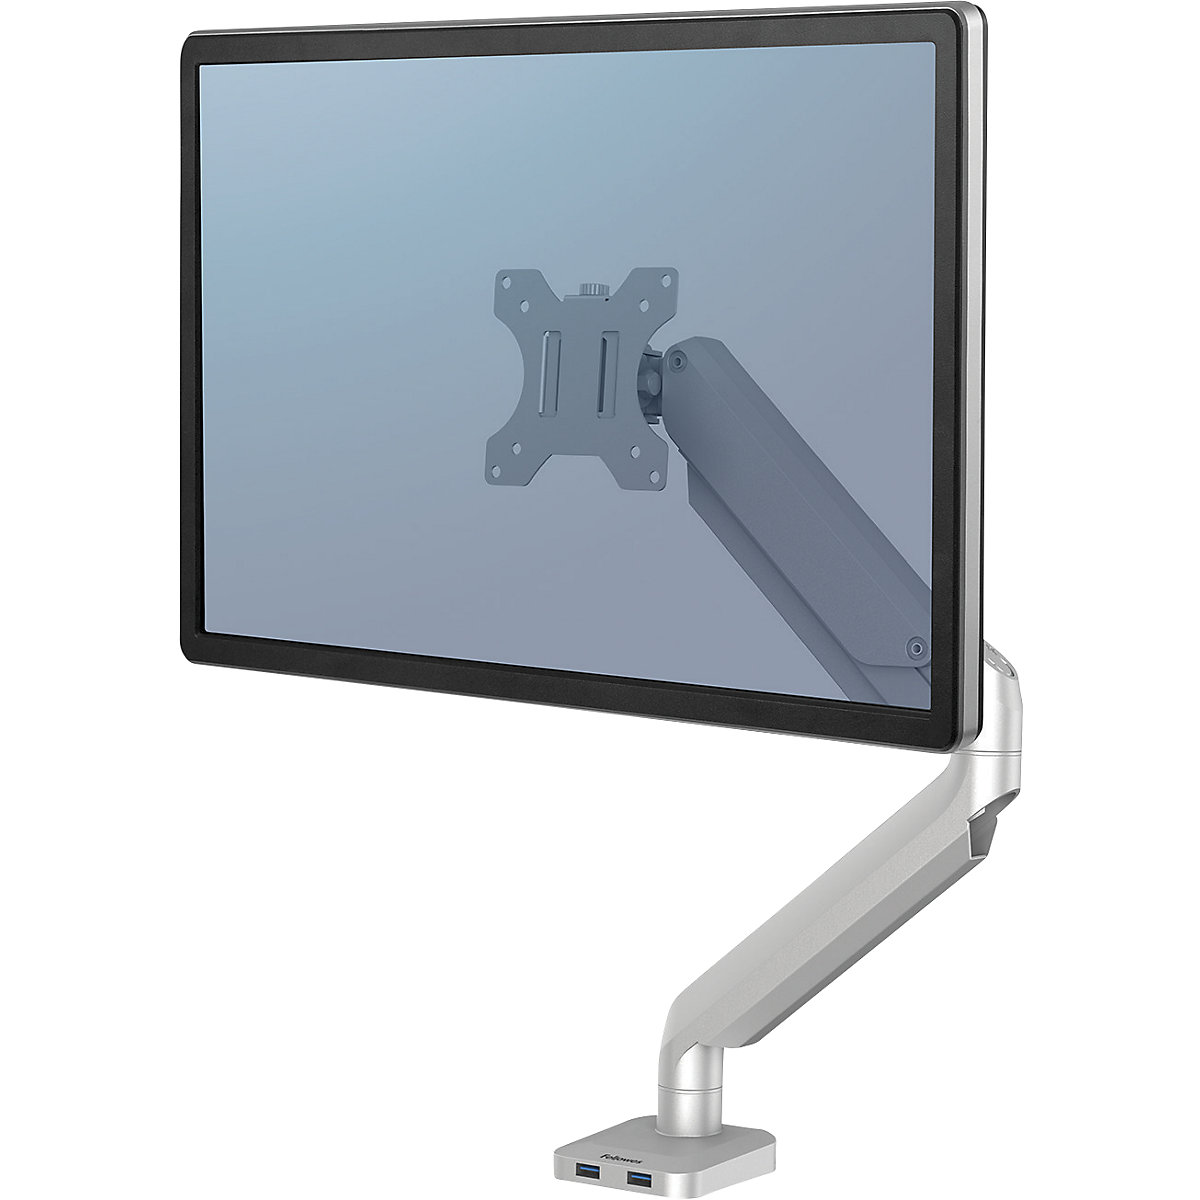 Brazo para monitor de la SERIE PLATINUM – Fellowes, brazo simple para 1 pantalla, plateado-4